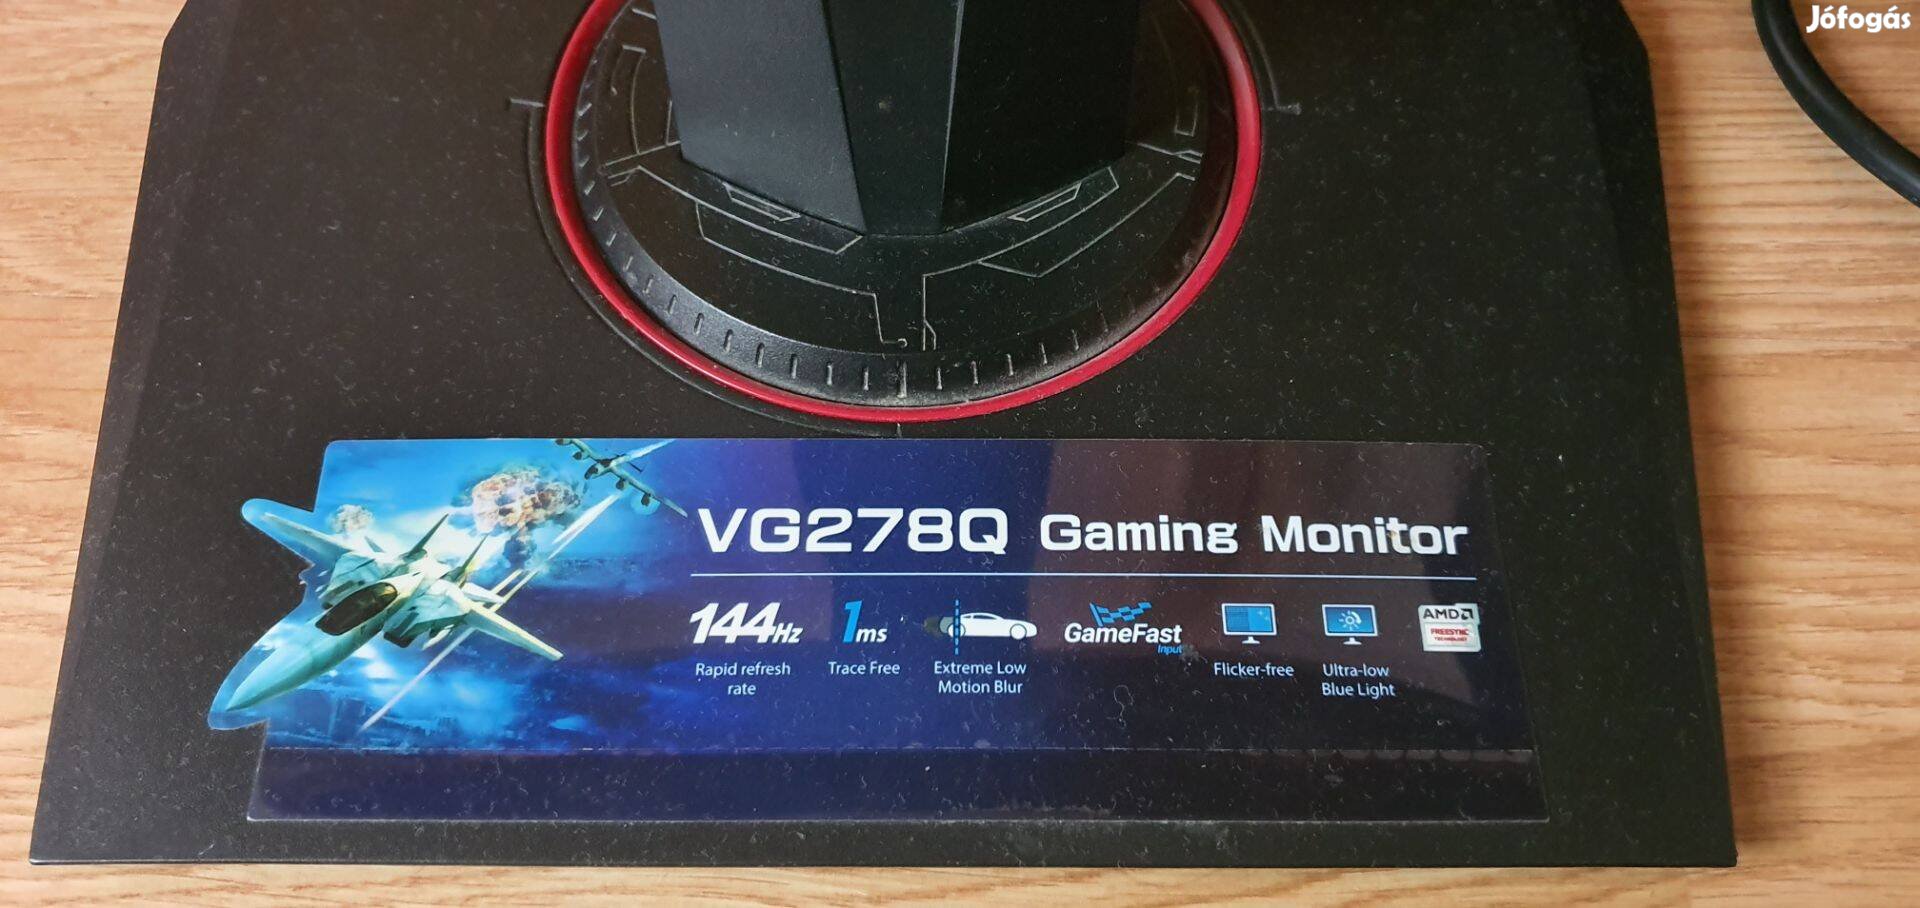 Asus VG278Q Gamer Monitor